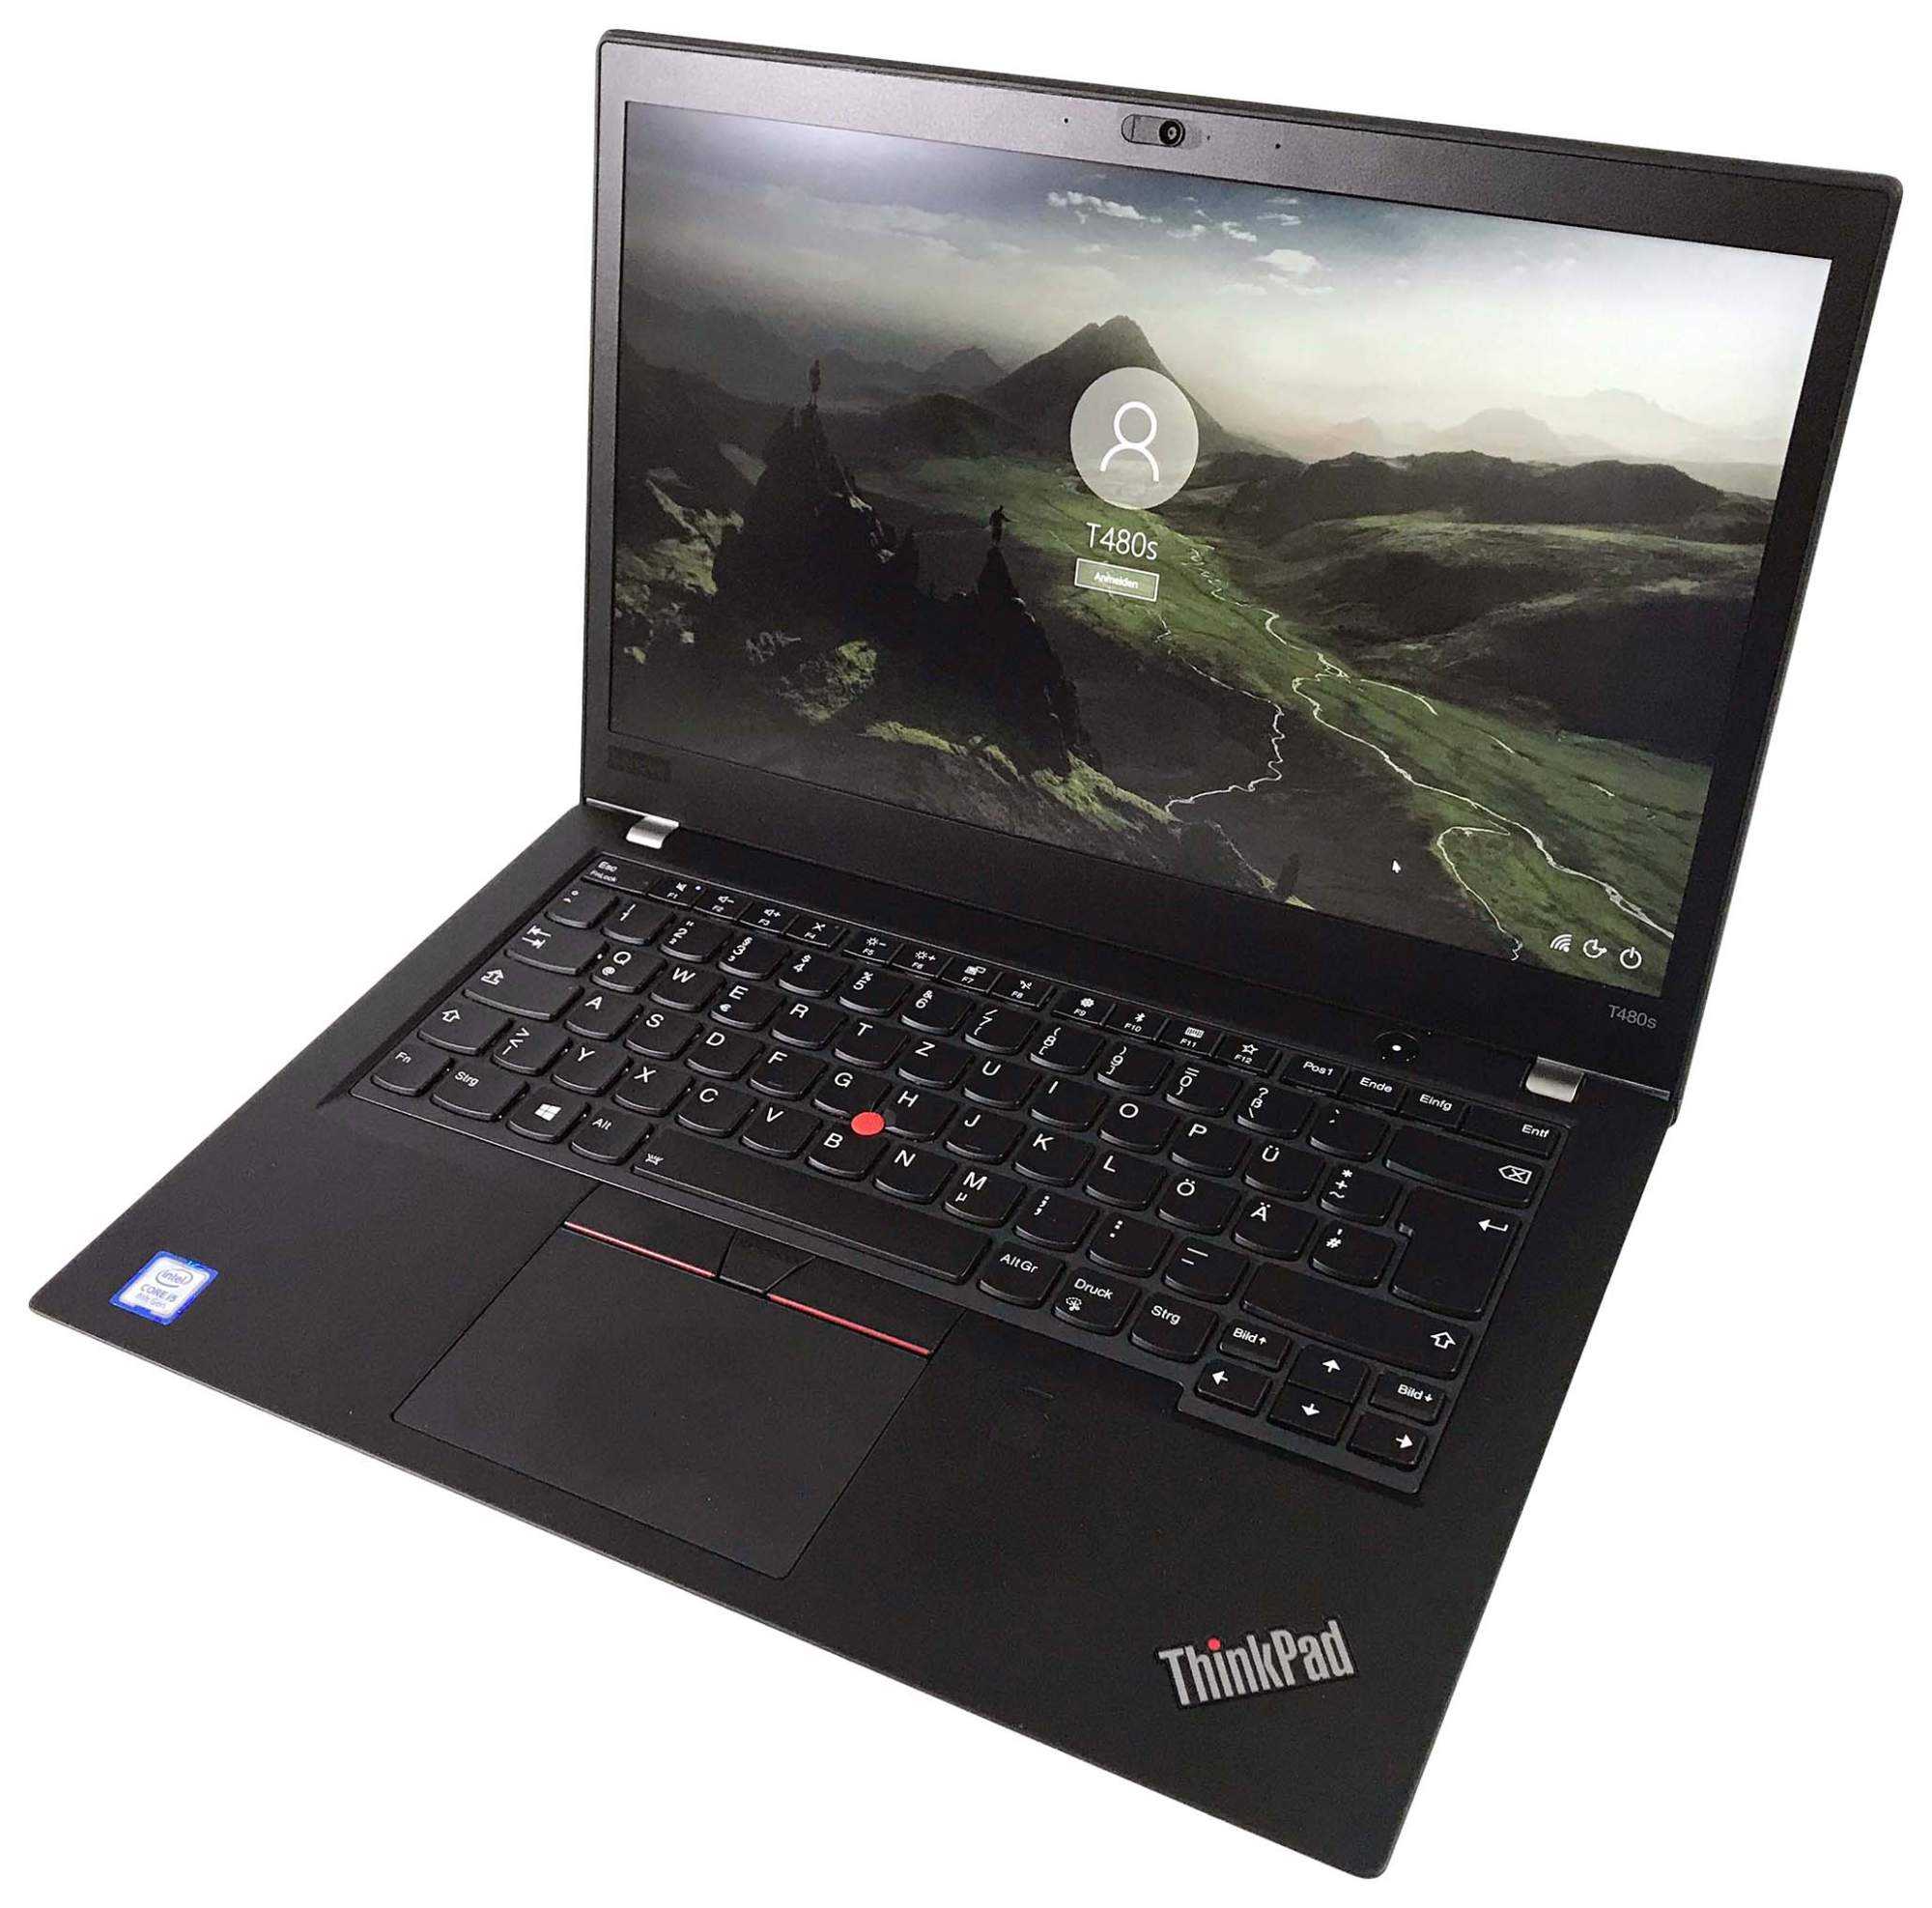 Lenovo thinkpad t470s-20hf0012us - notebookcheck-ru.com